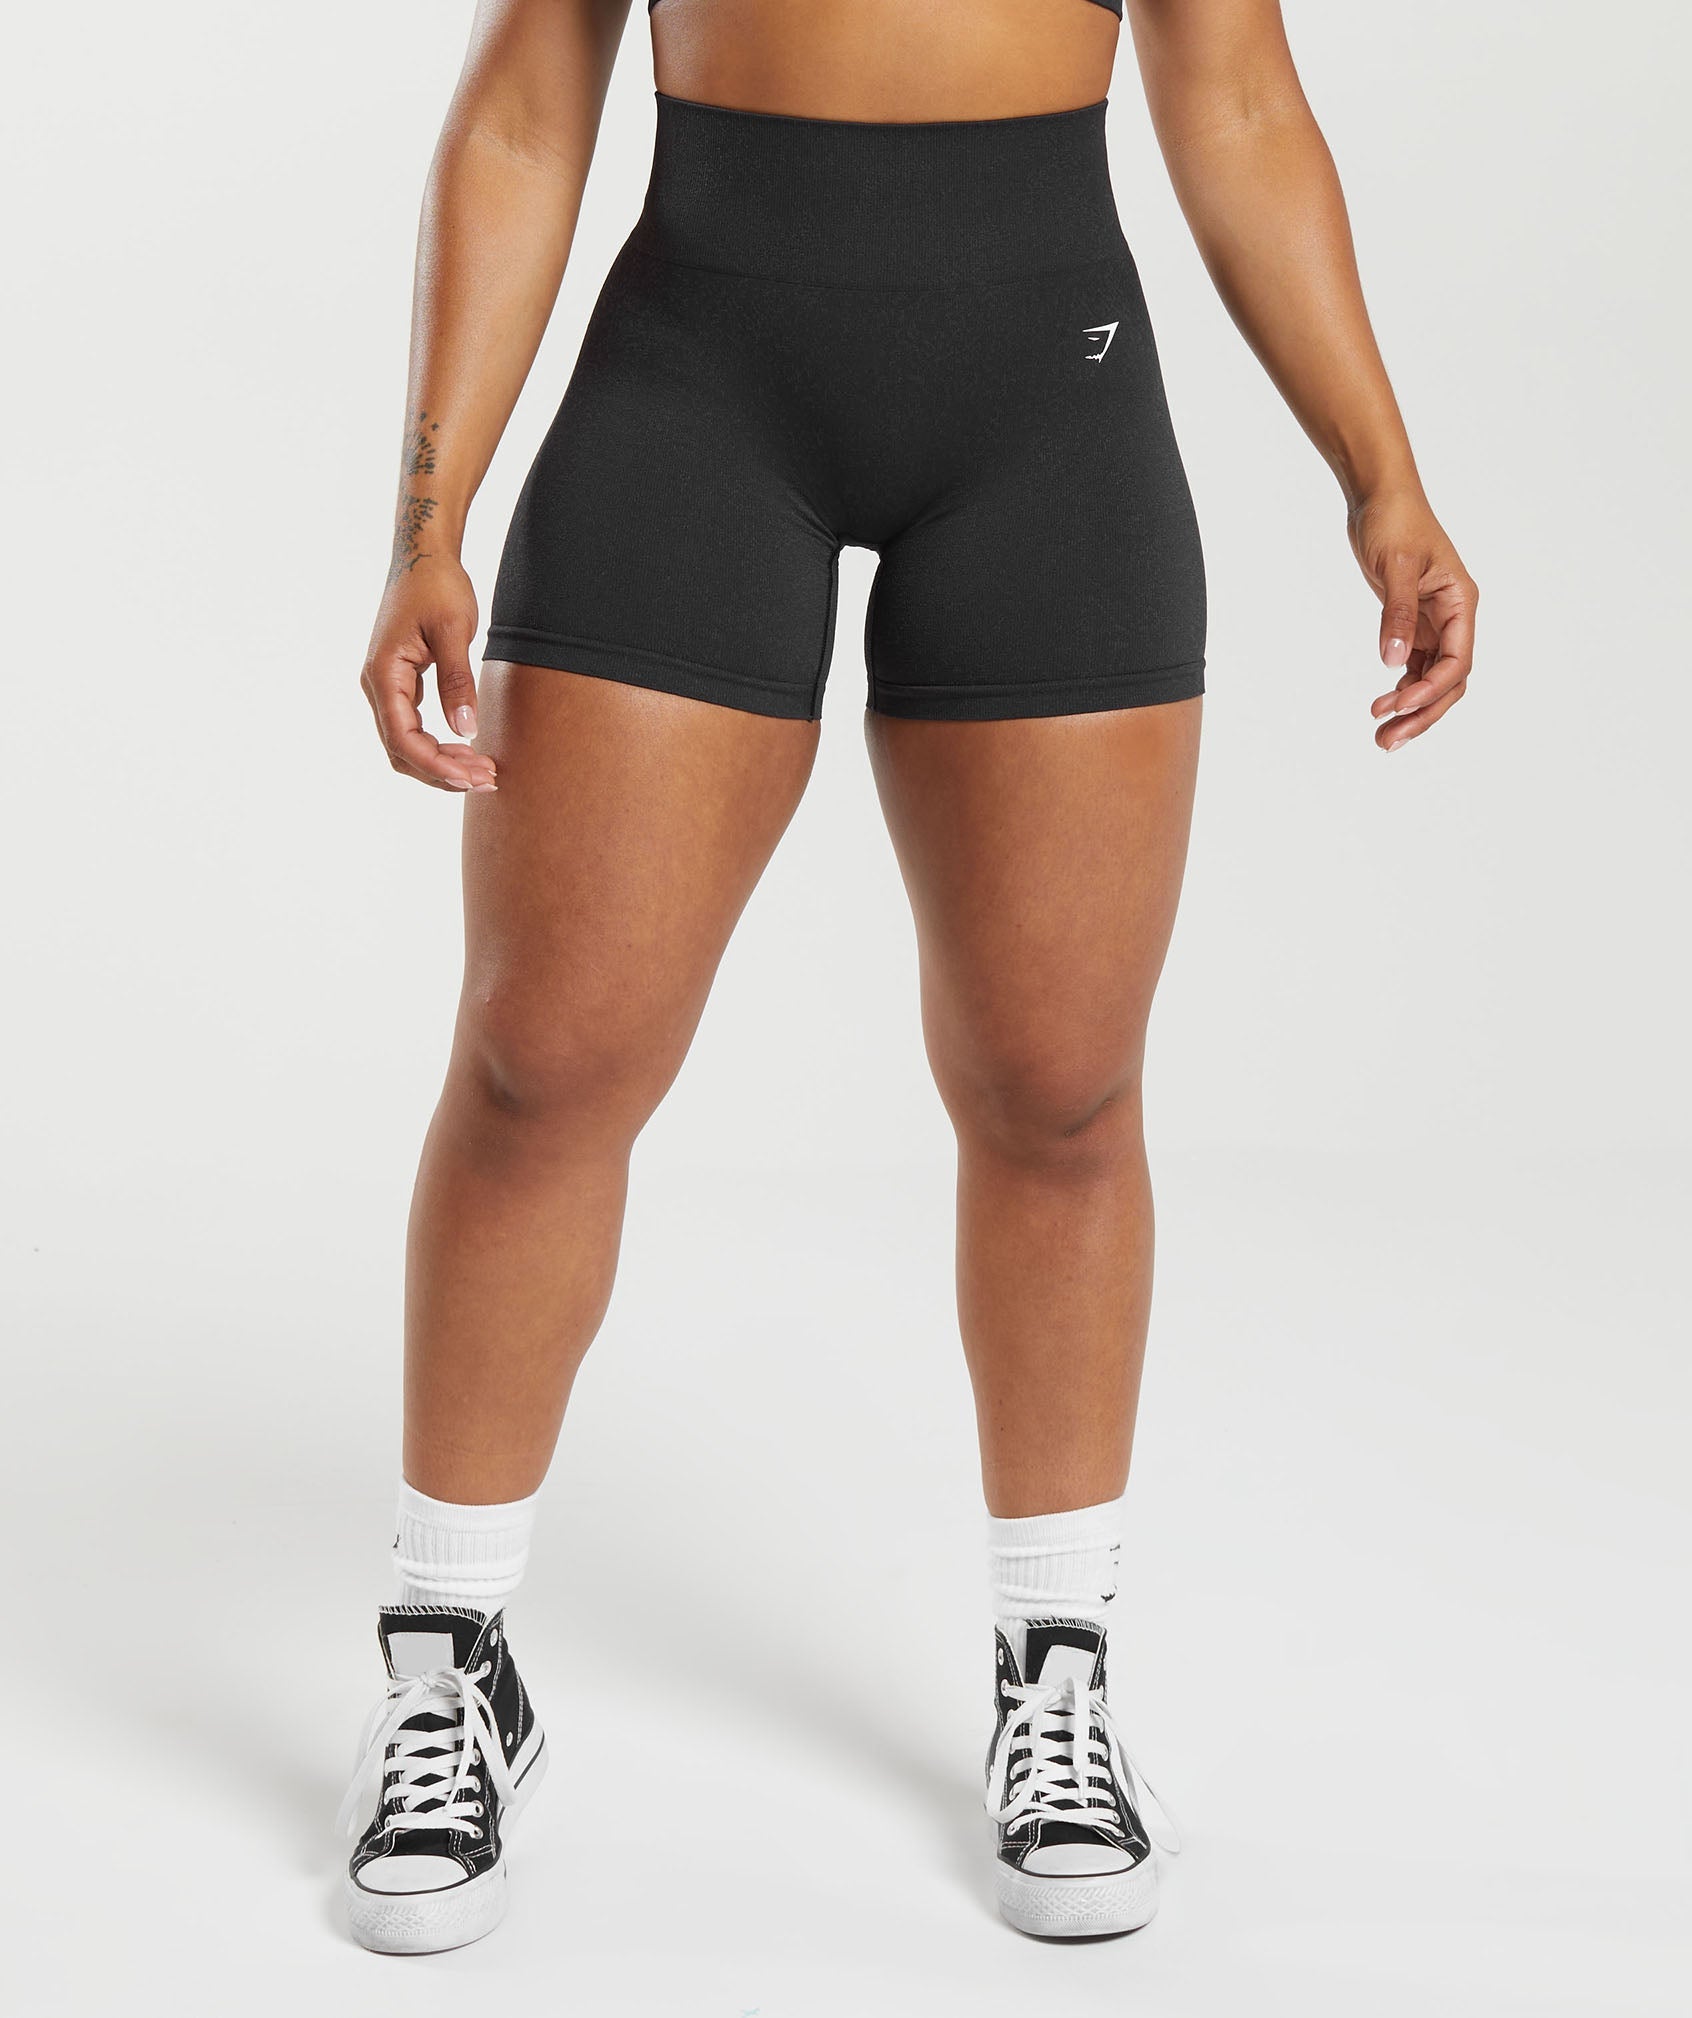 Adapt Fleck Seamless Shorts in Black/Smokey Grey